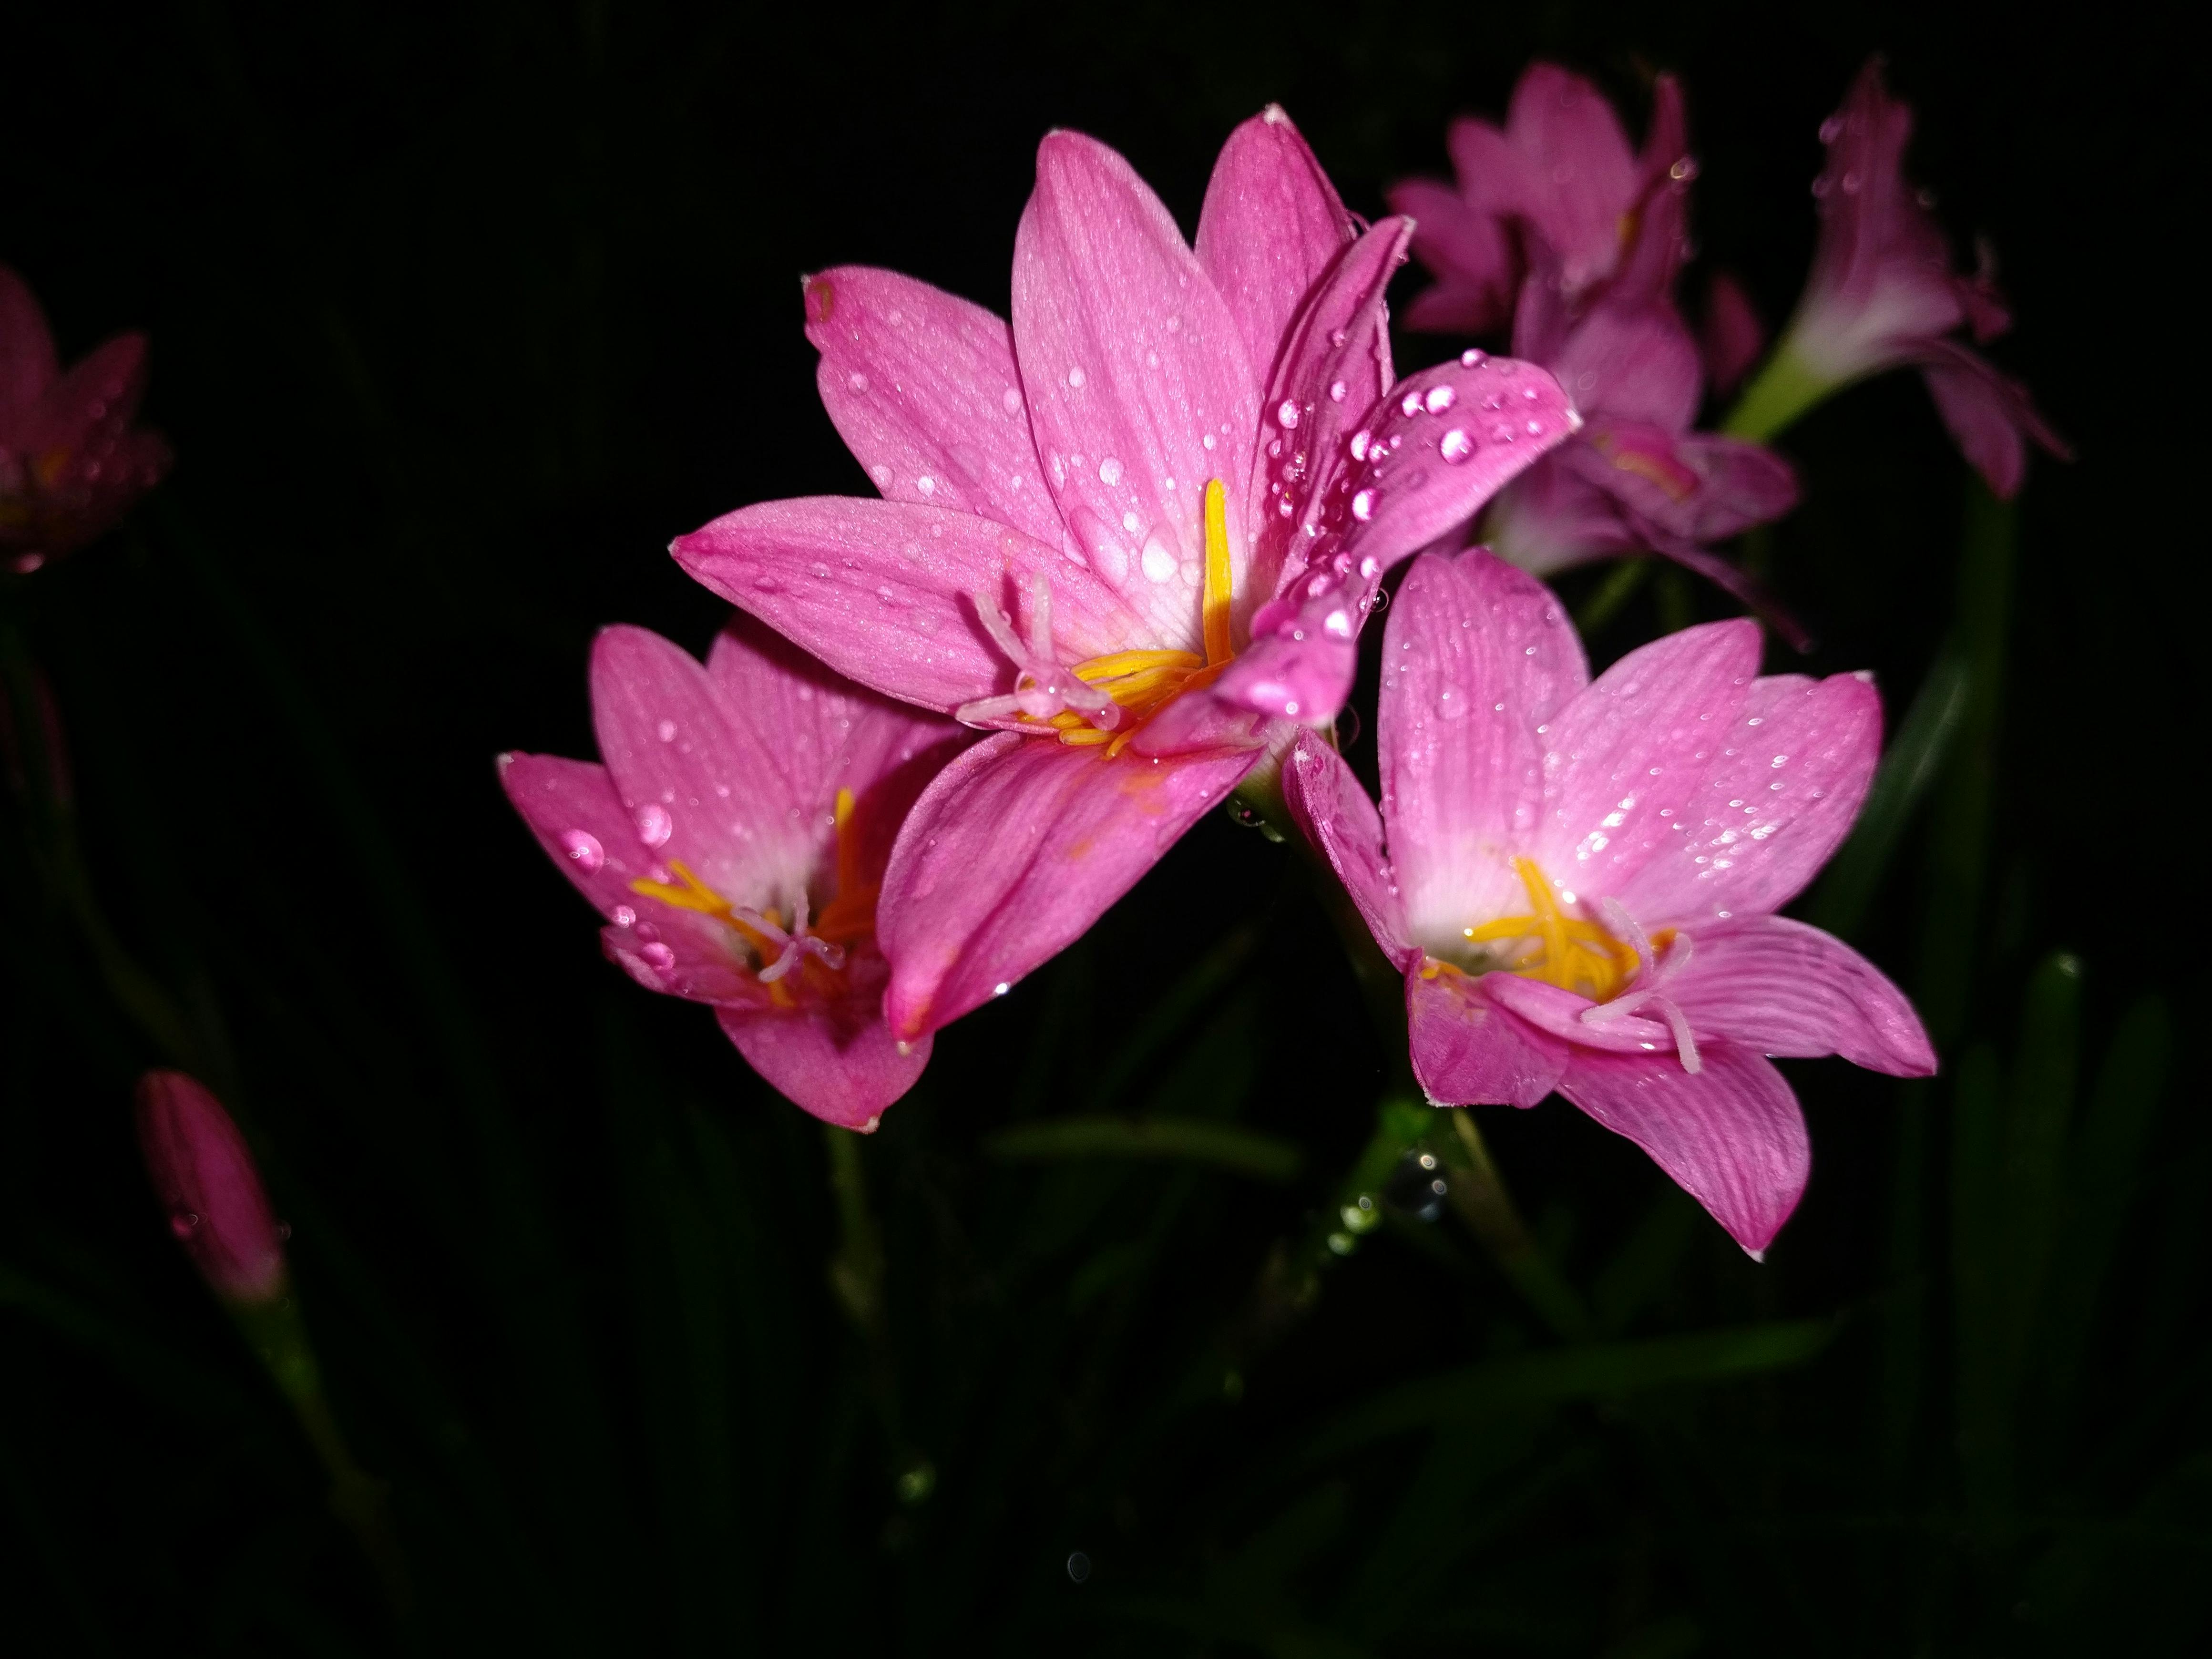 Free stock photo of Night flower, night photography